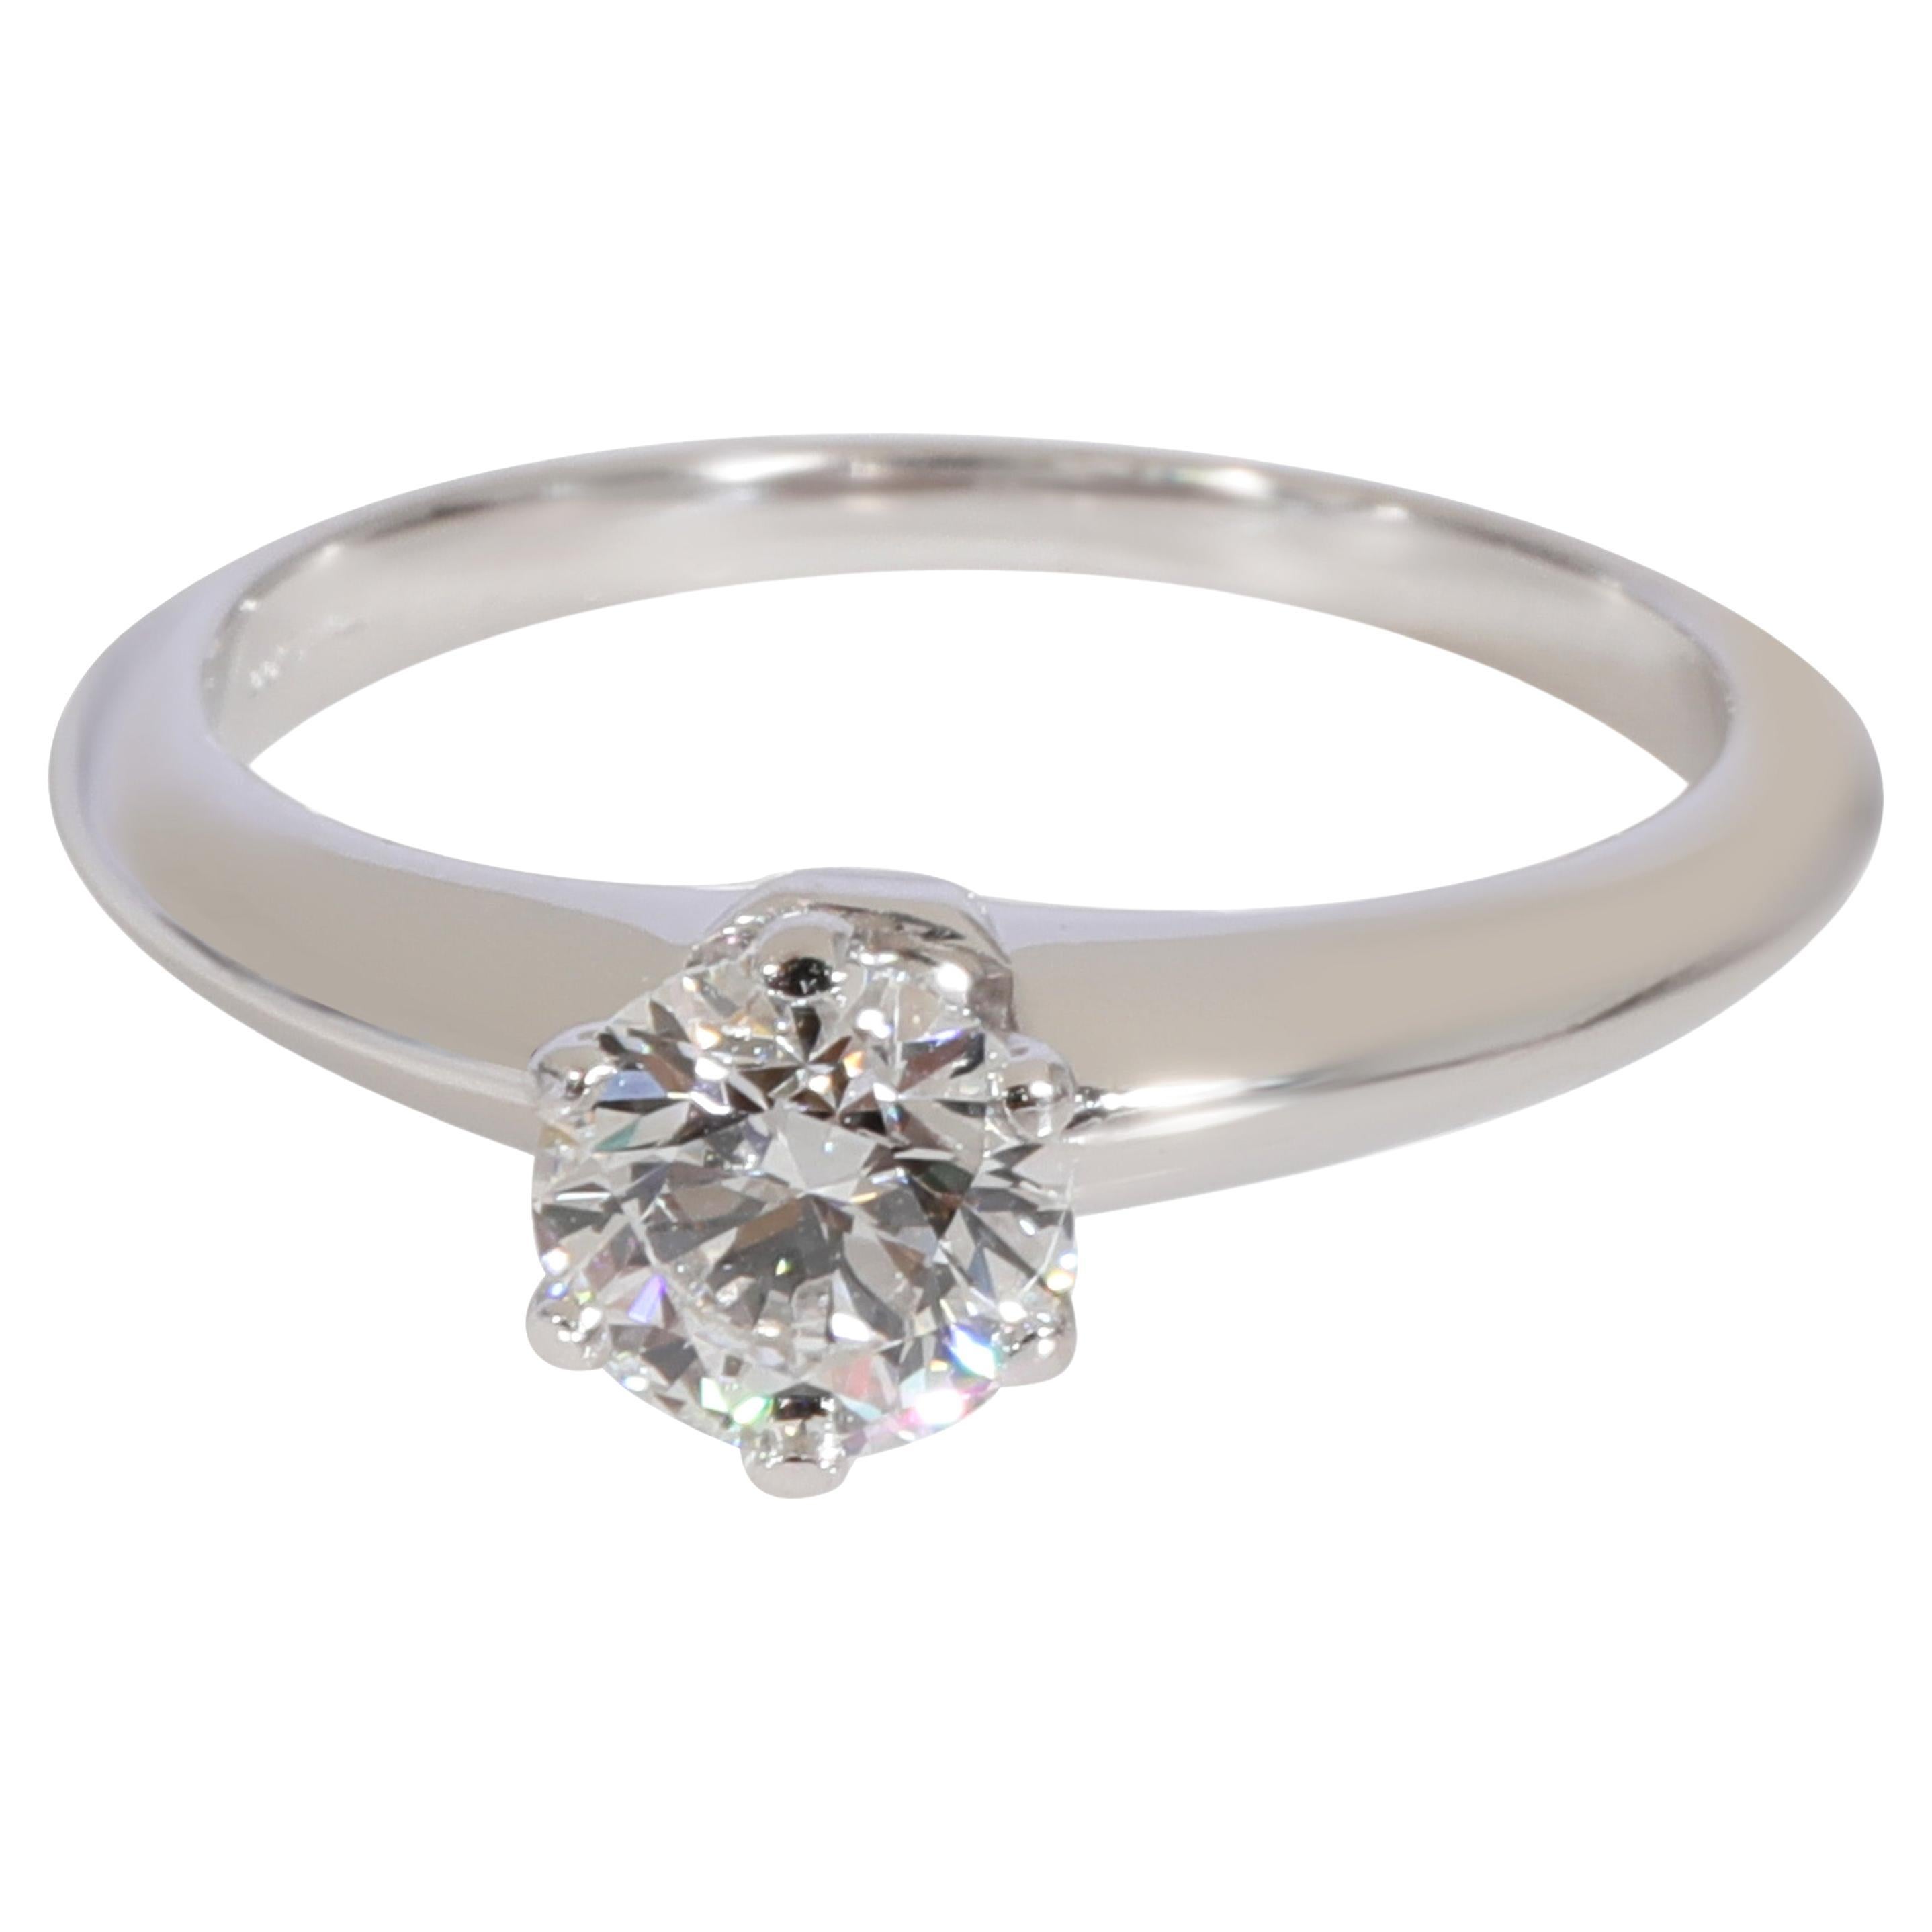 Tiffany & Co. Diamond Solitaire Ring in Platinum D VVS2